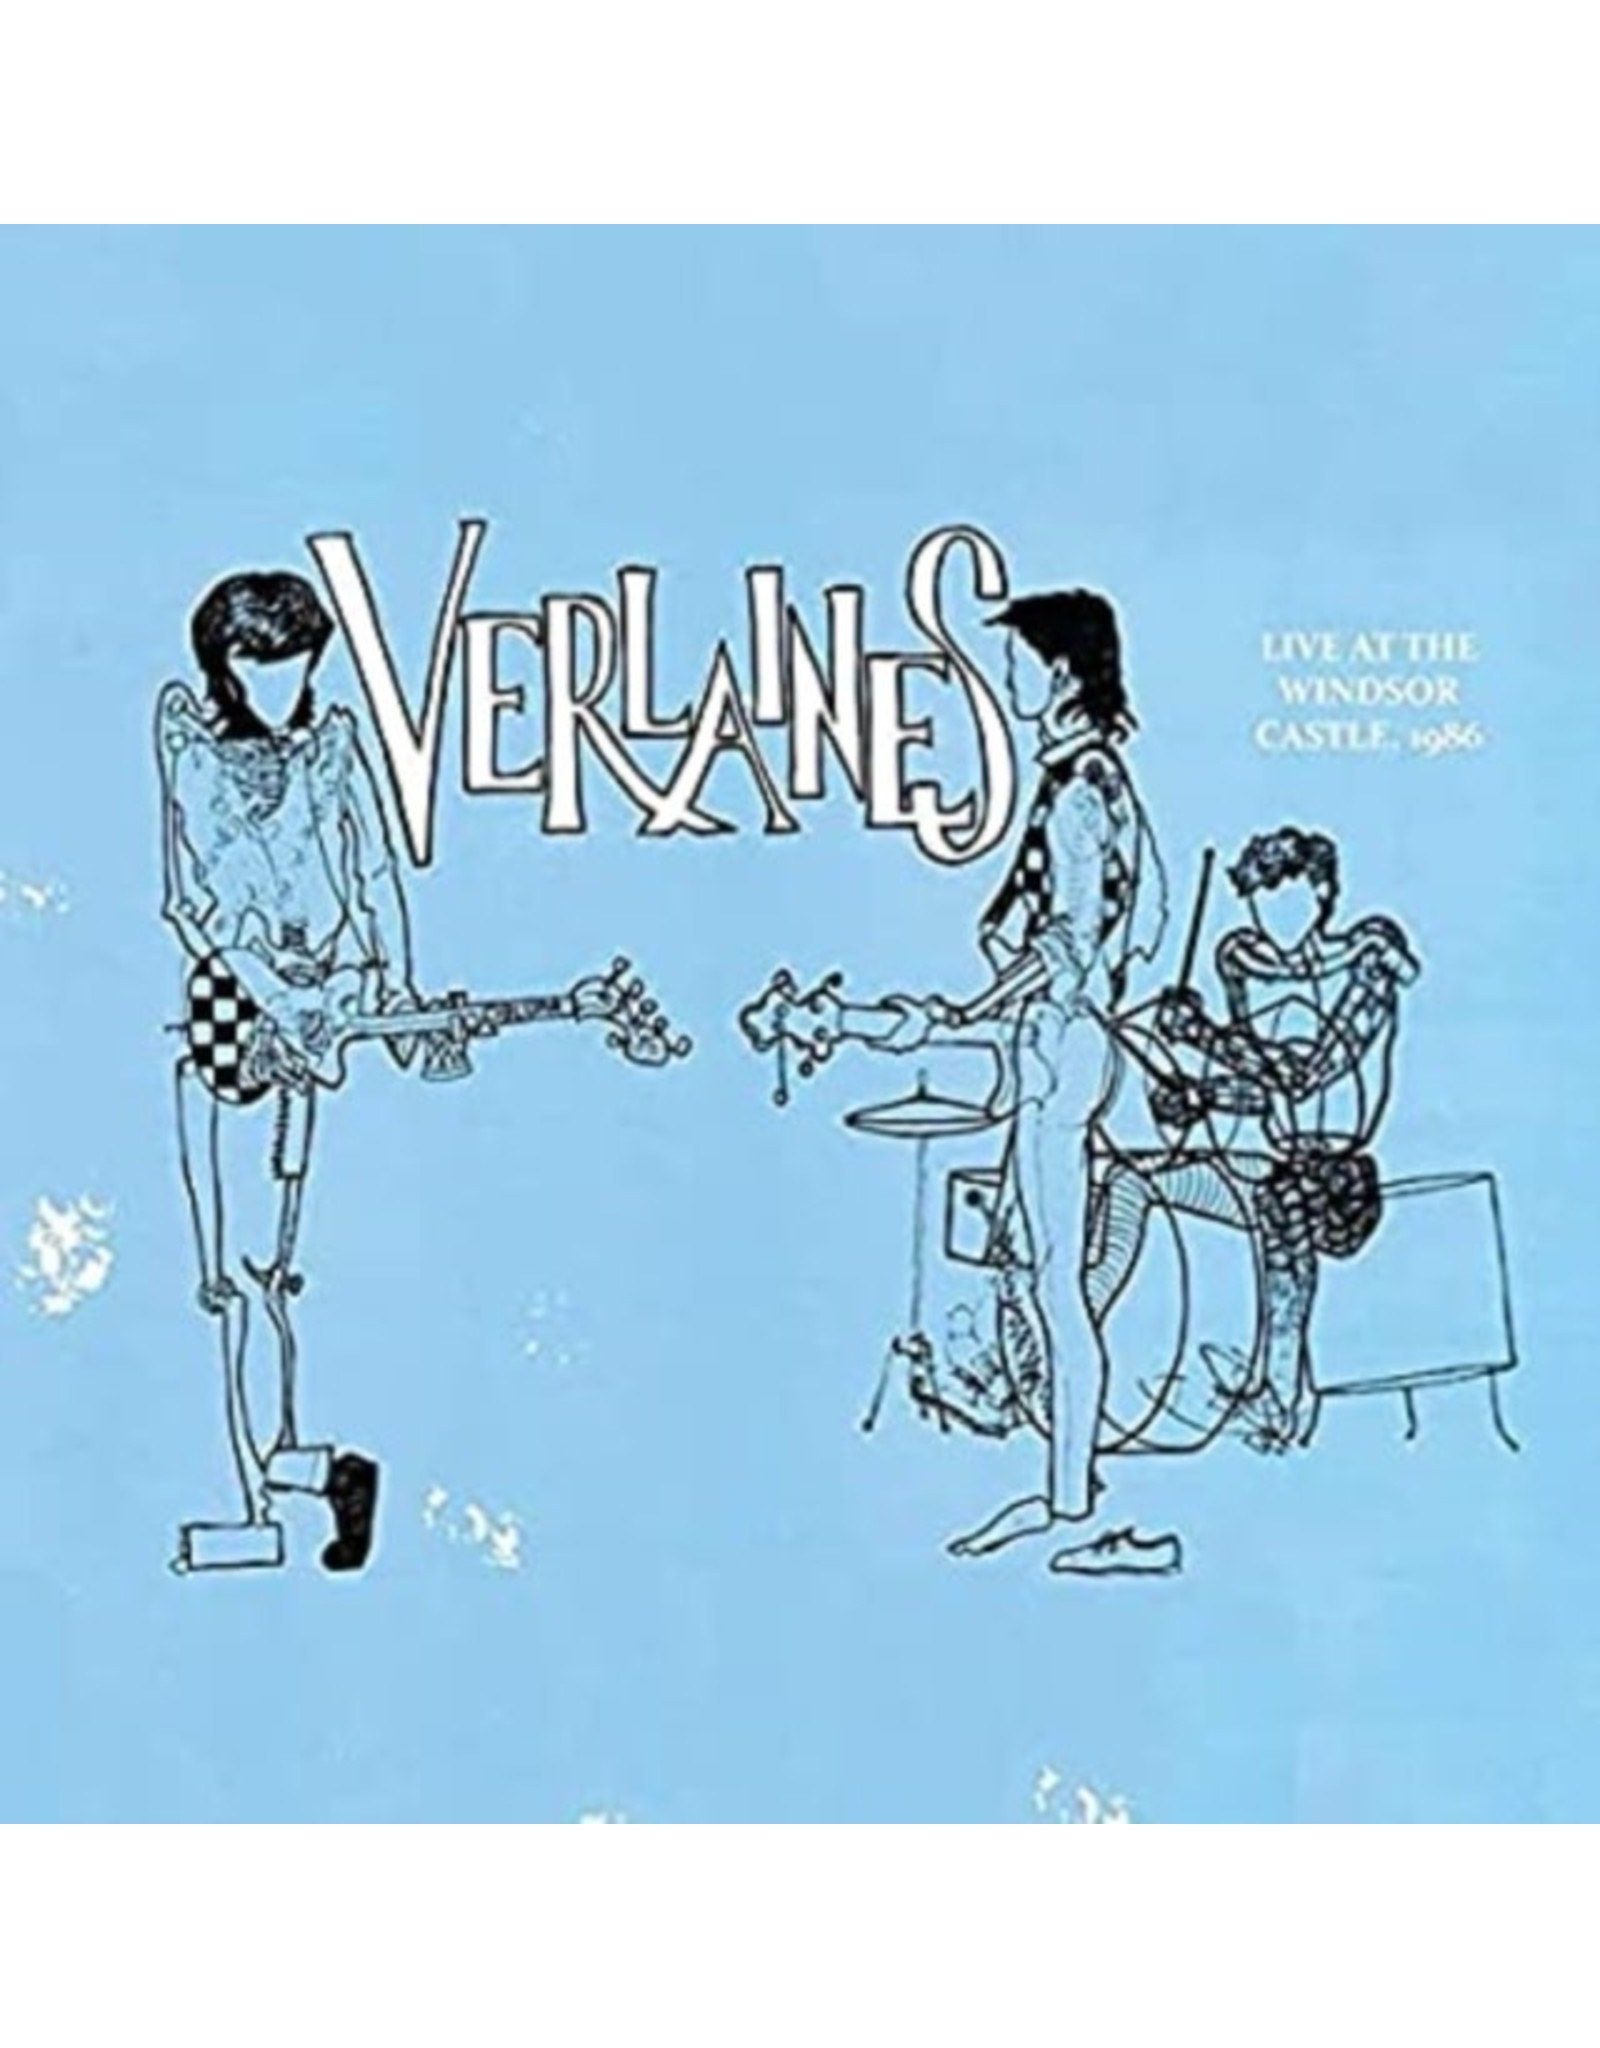 New Vinyl Verlaines - Live at The Windsor Castle, 1986 (Sky Blue) 2LP